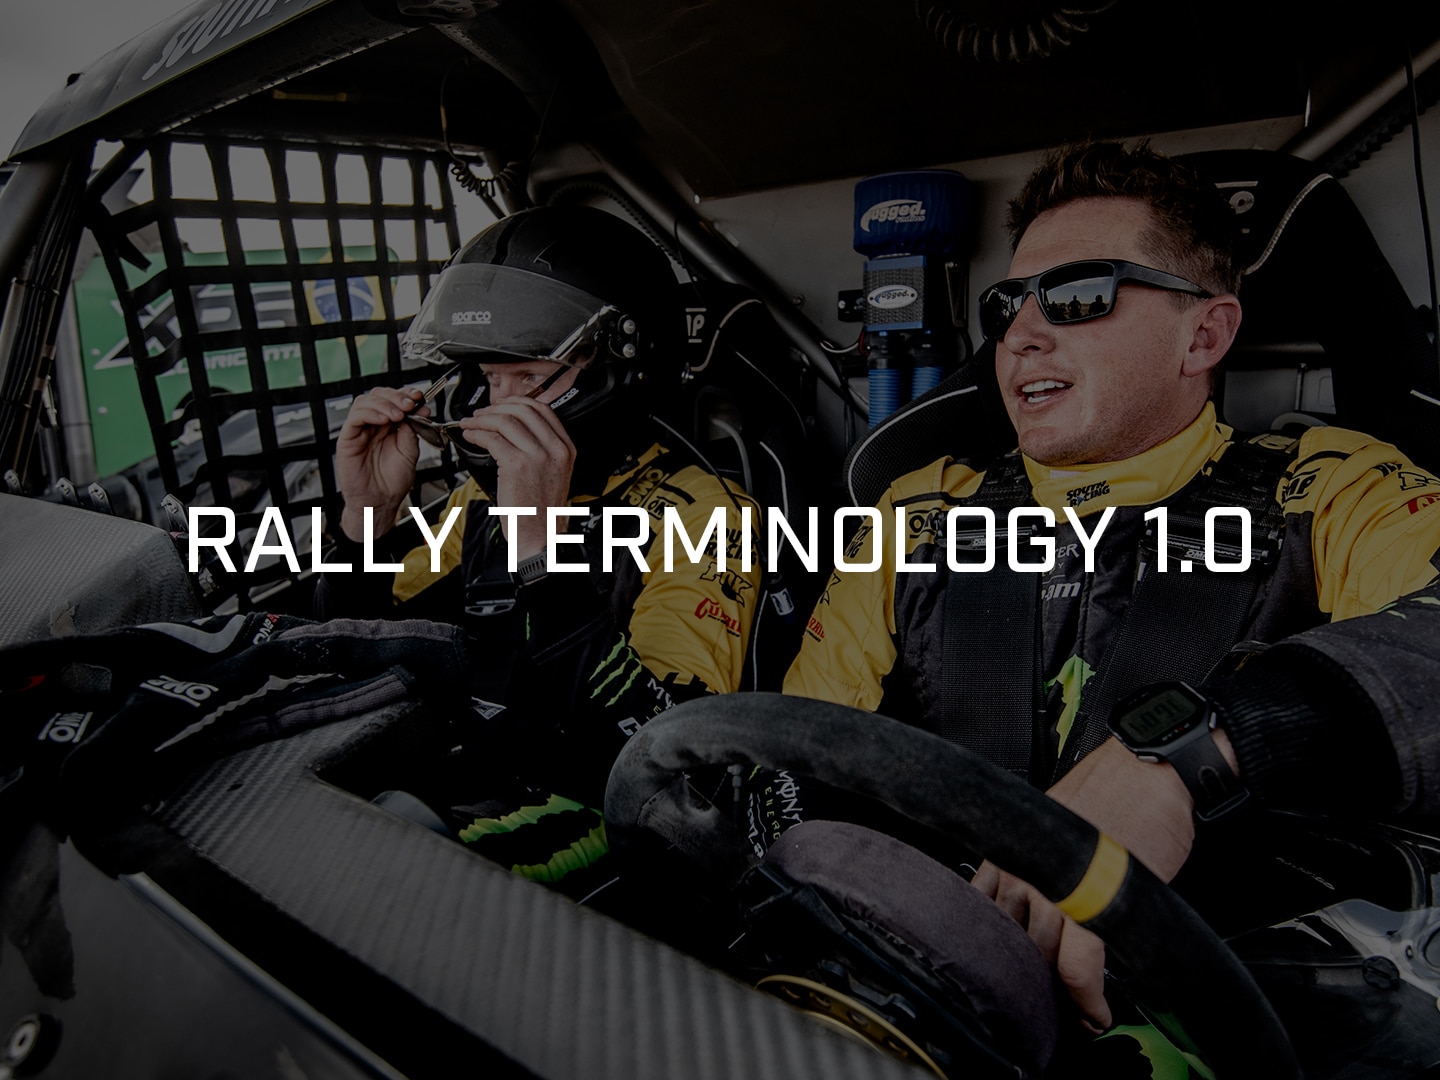 Rally terminology 1.0